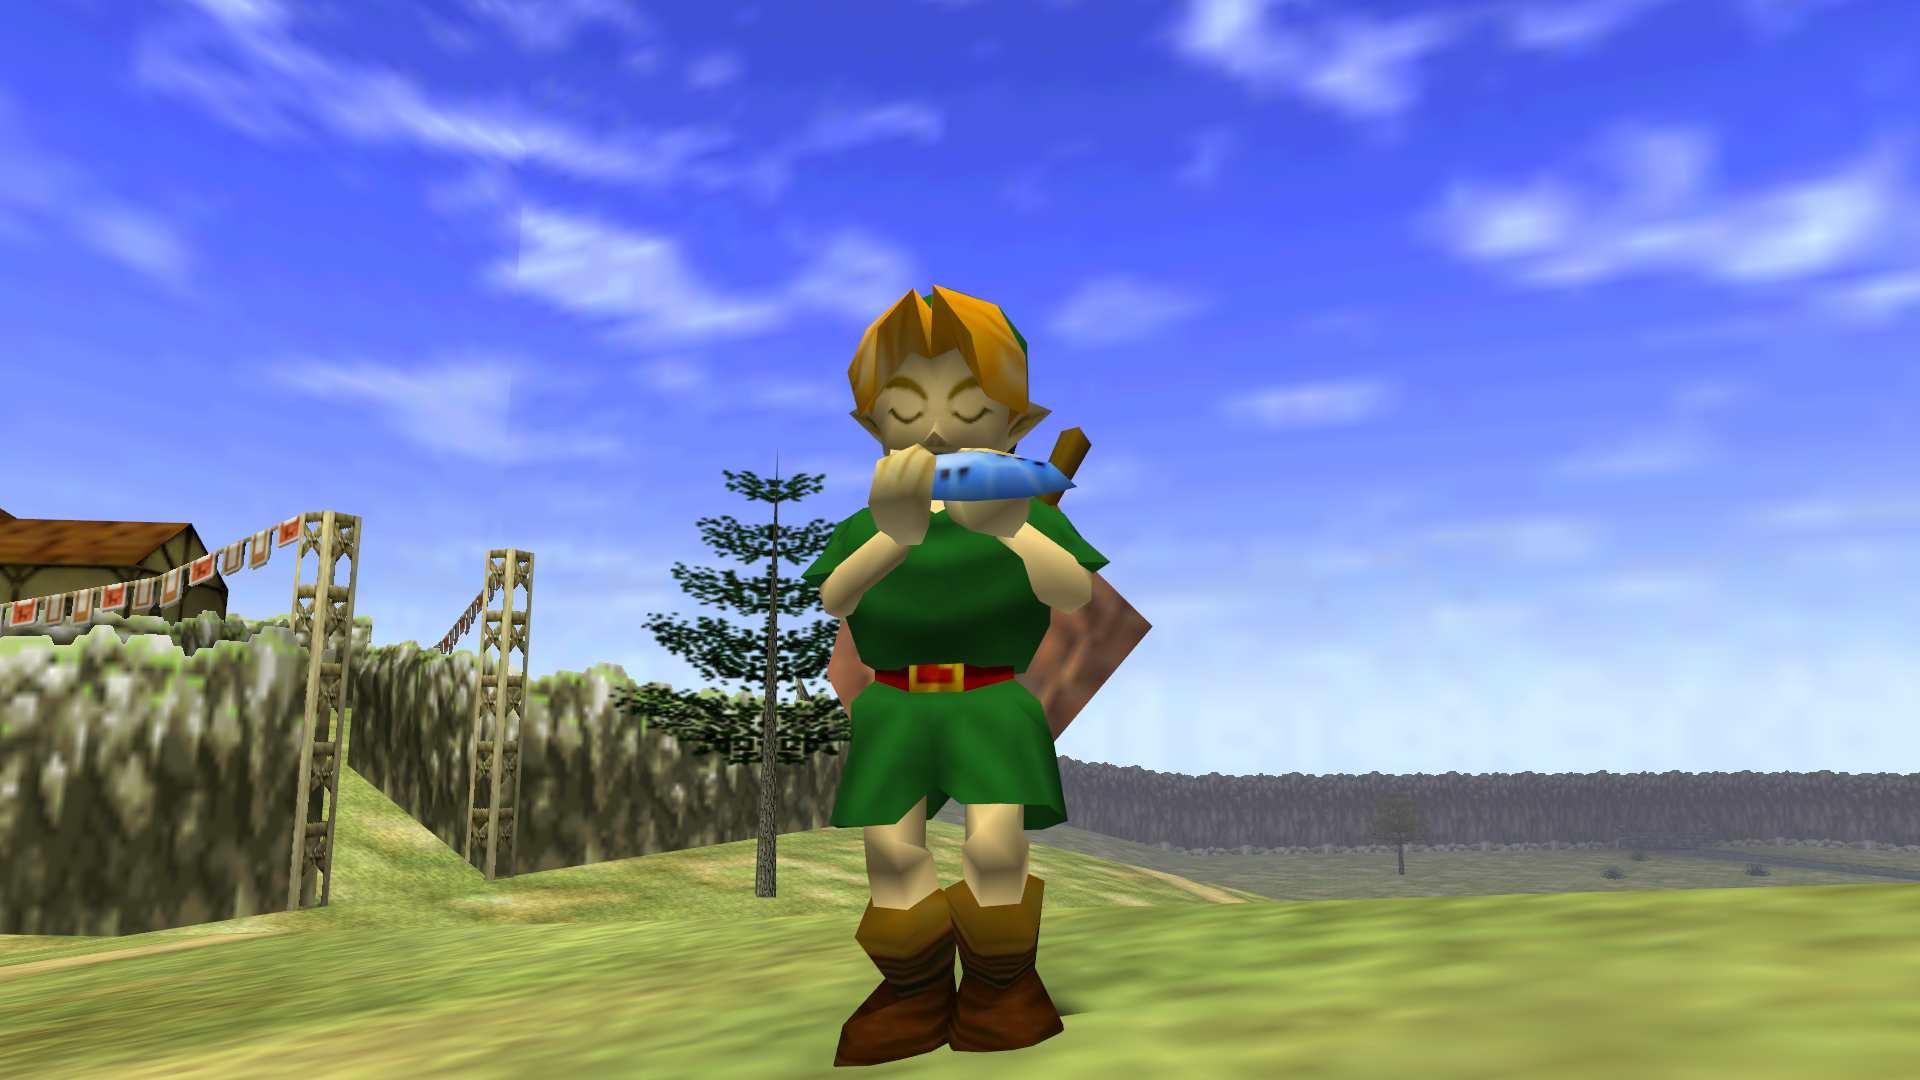 Chơi The Legend of Zelda: Ocarina of Time bằng sáo ocarina thực thụ